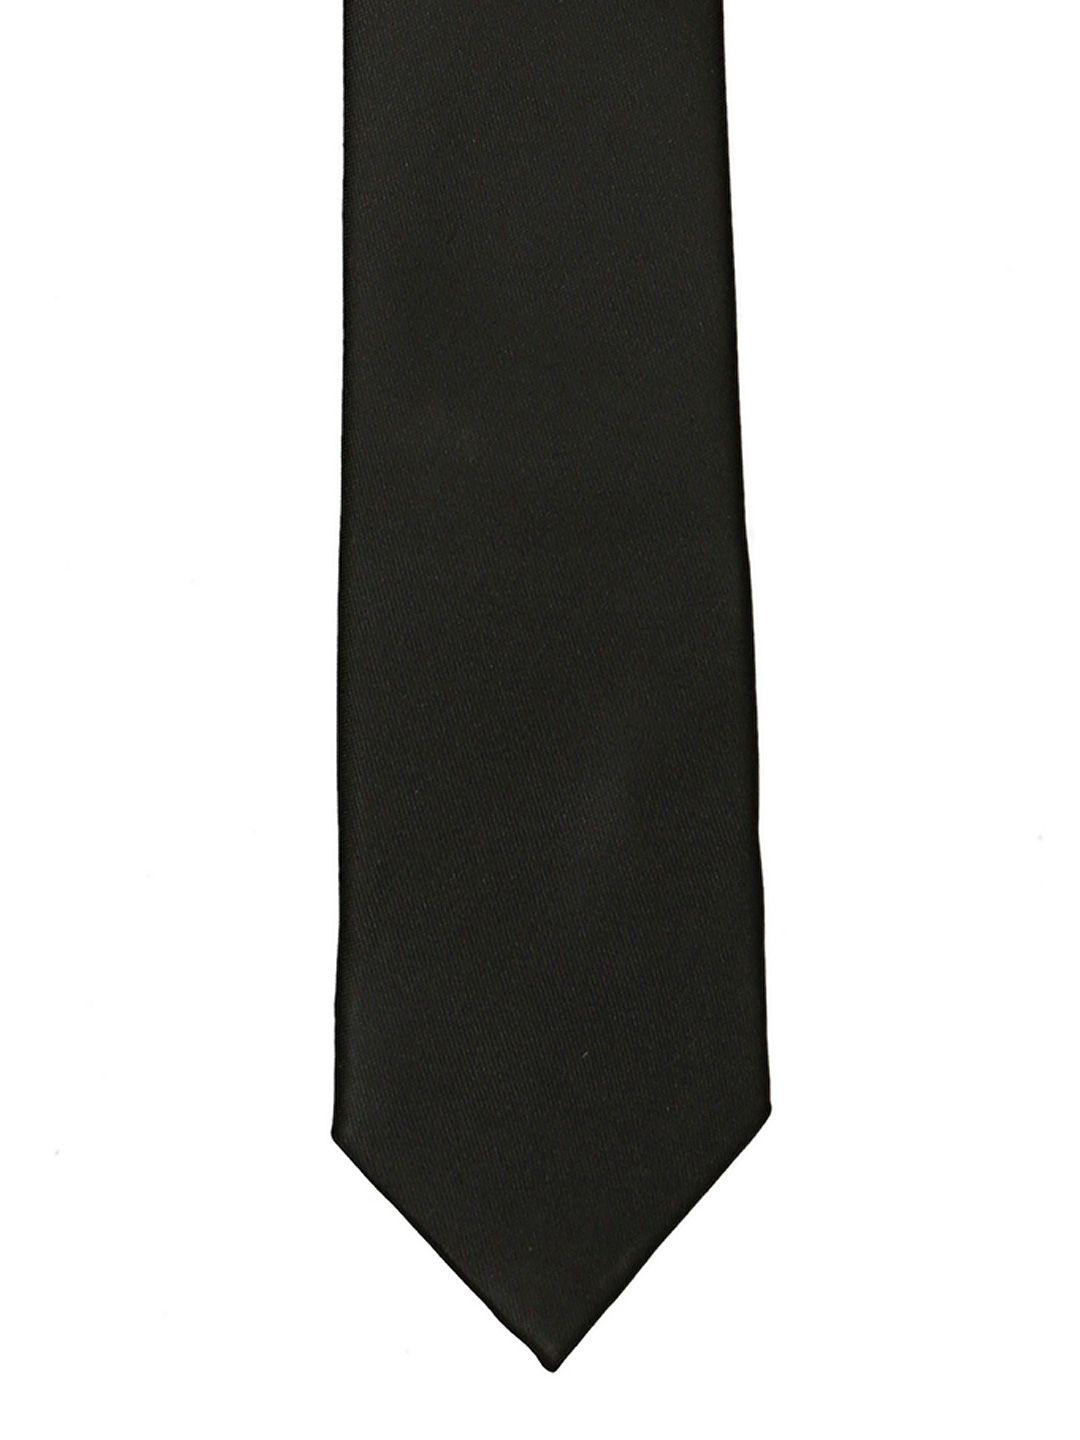 tossido black slim tie